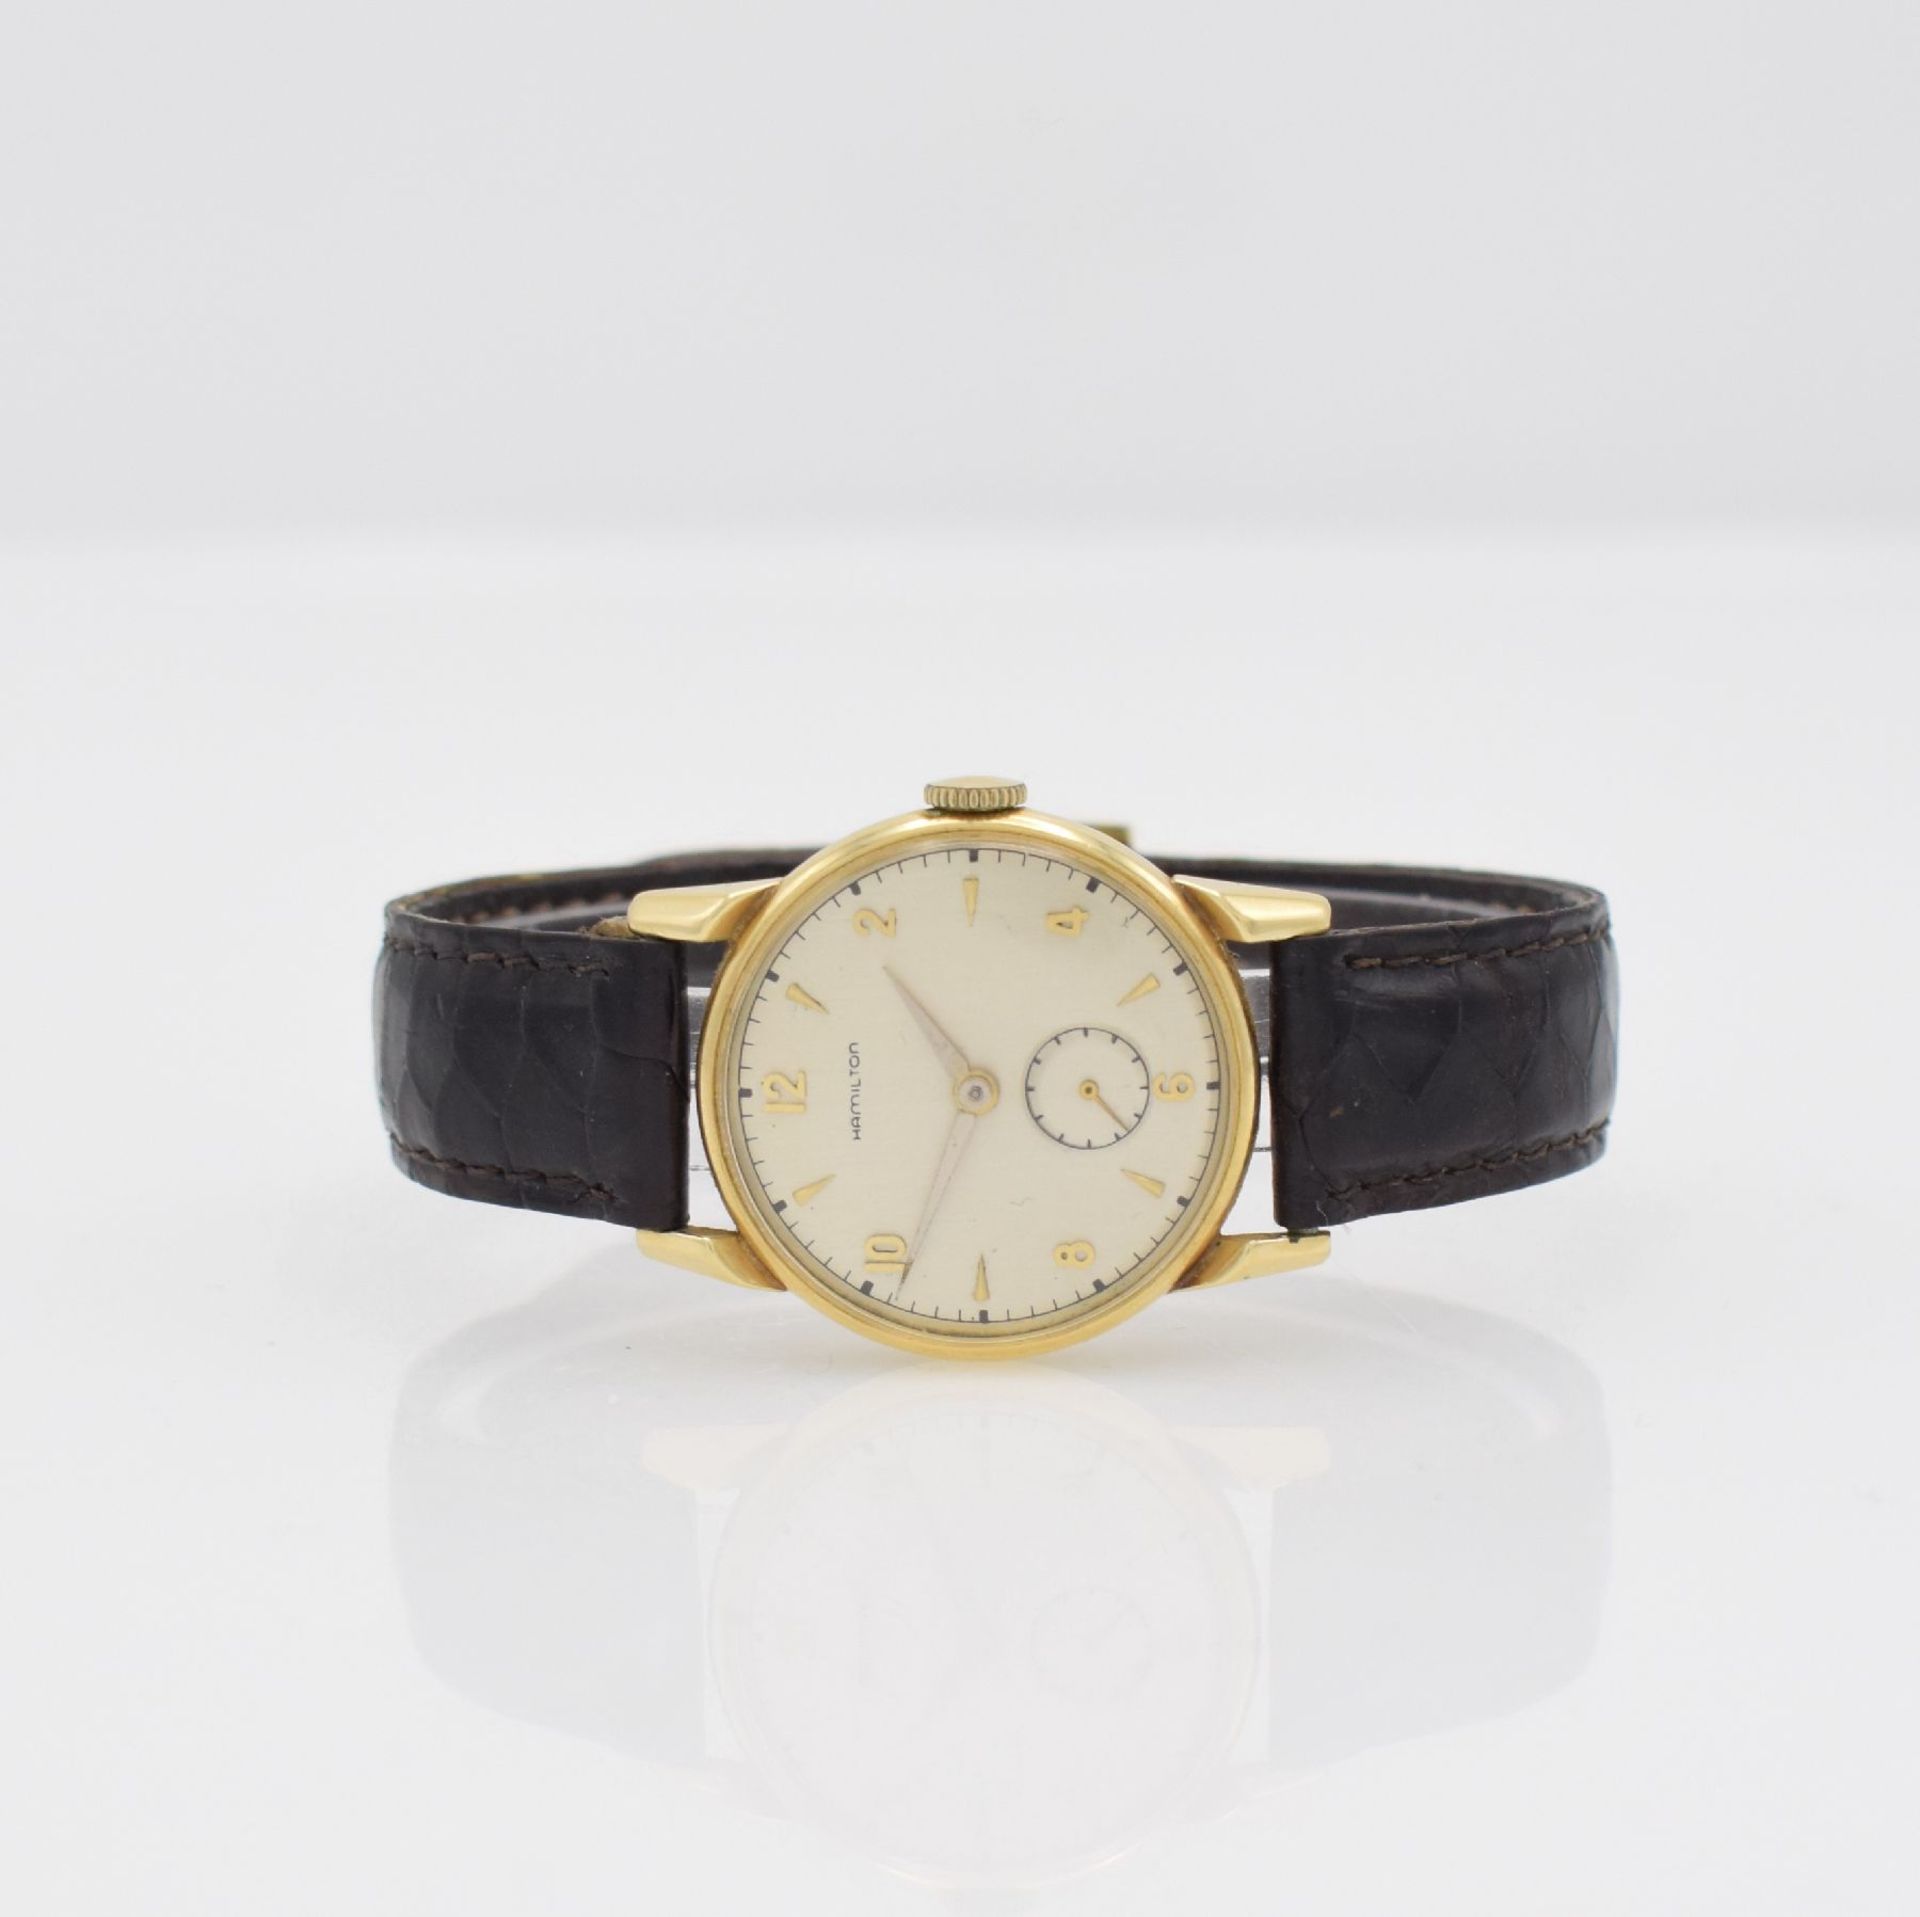 HAMILTON Armbanduhr in GG 585/000, USA um 1947,